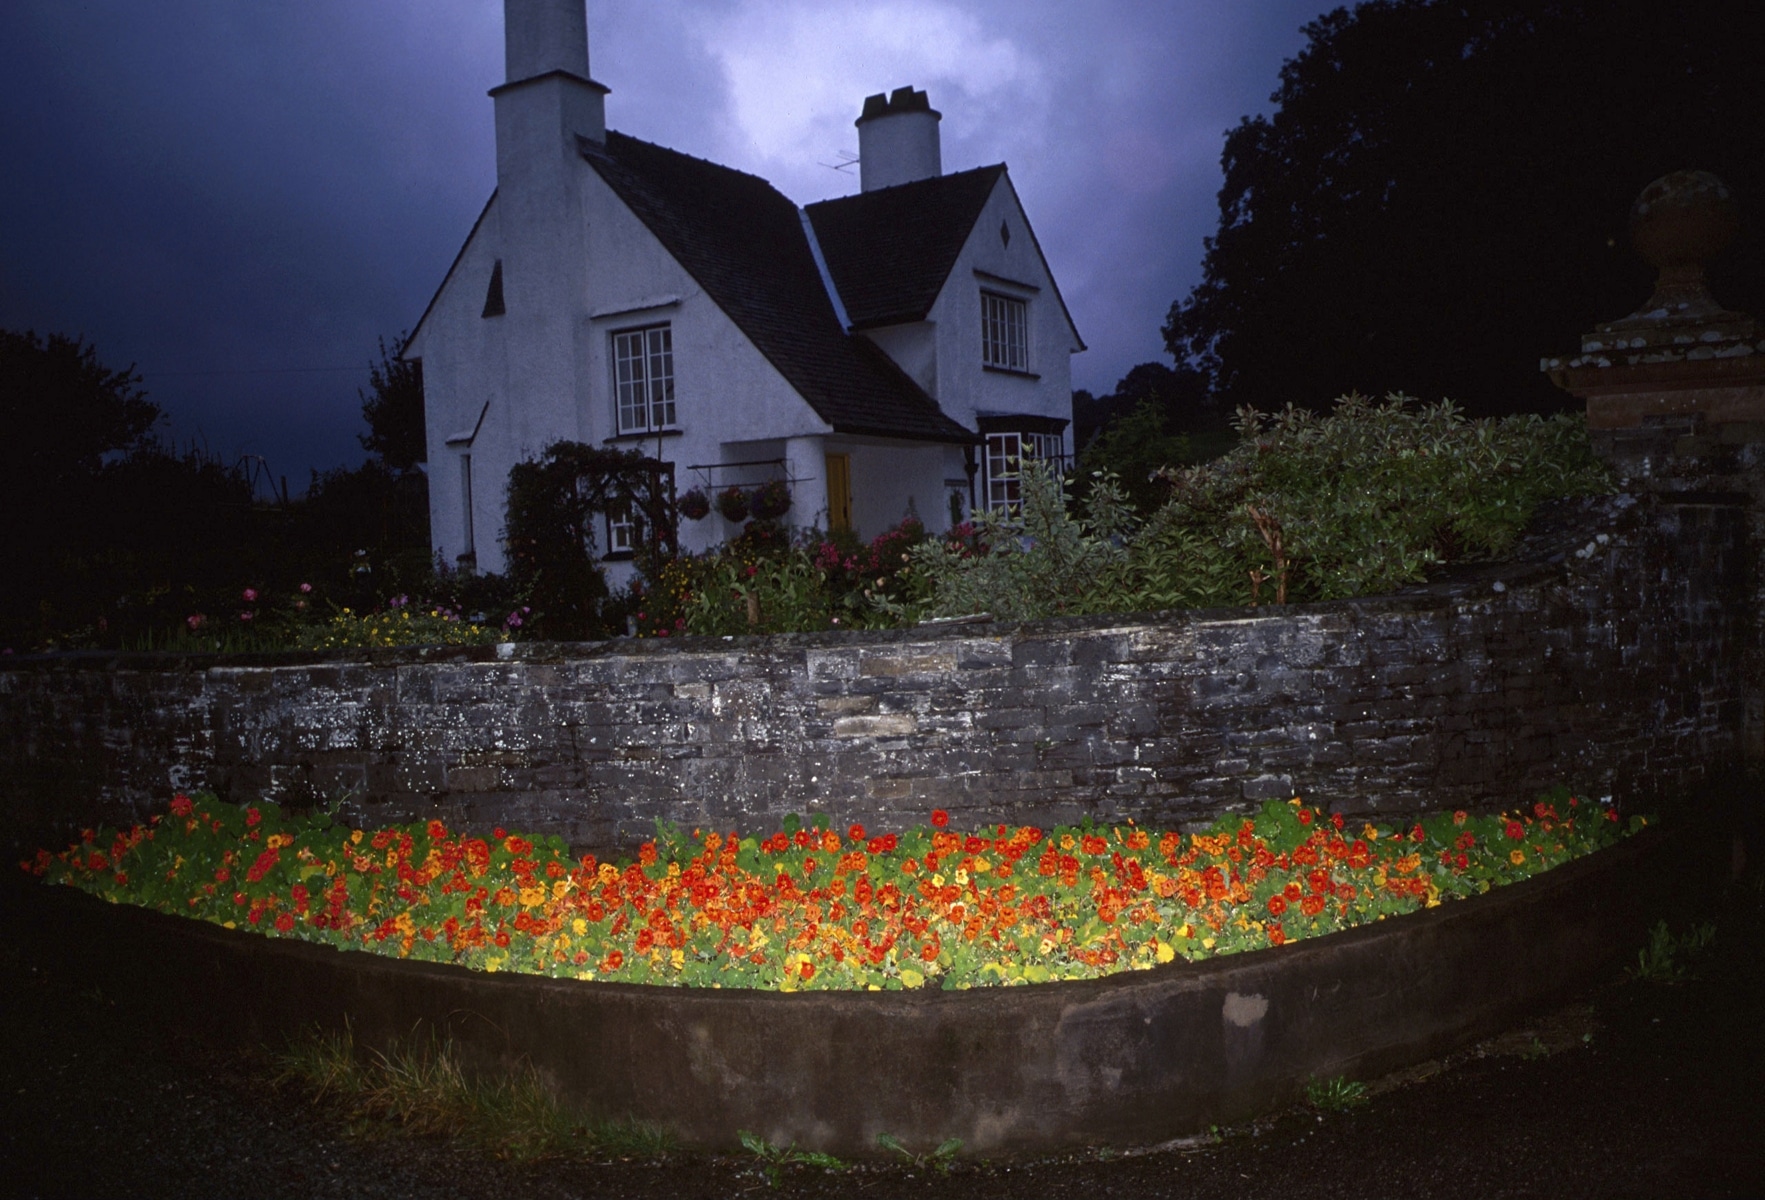 Wordsworth's Childhood Home